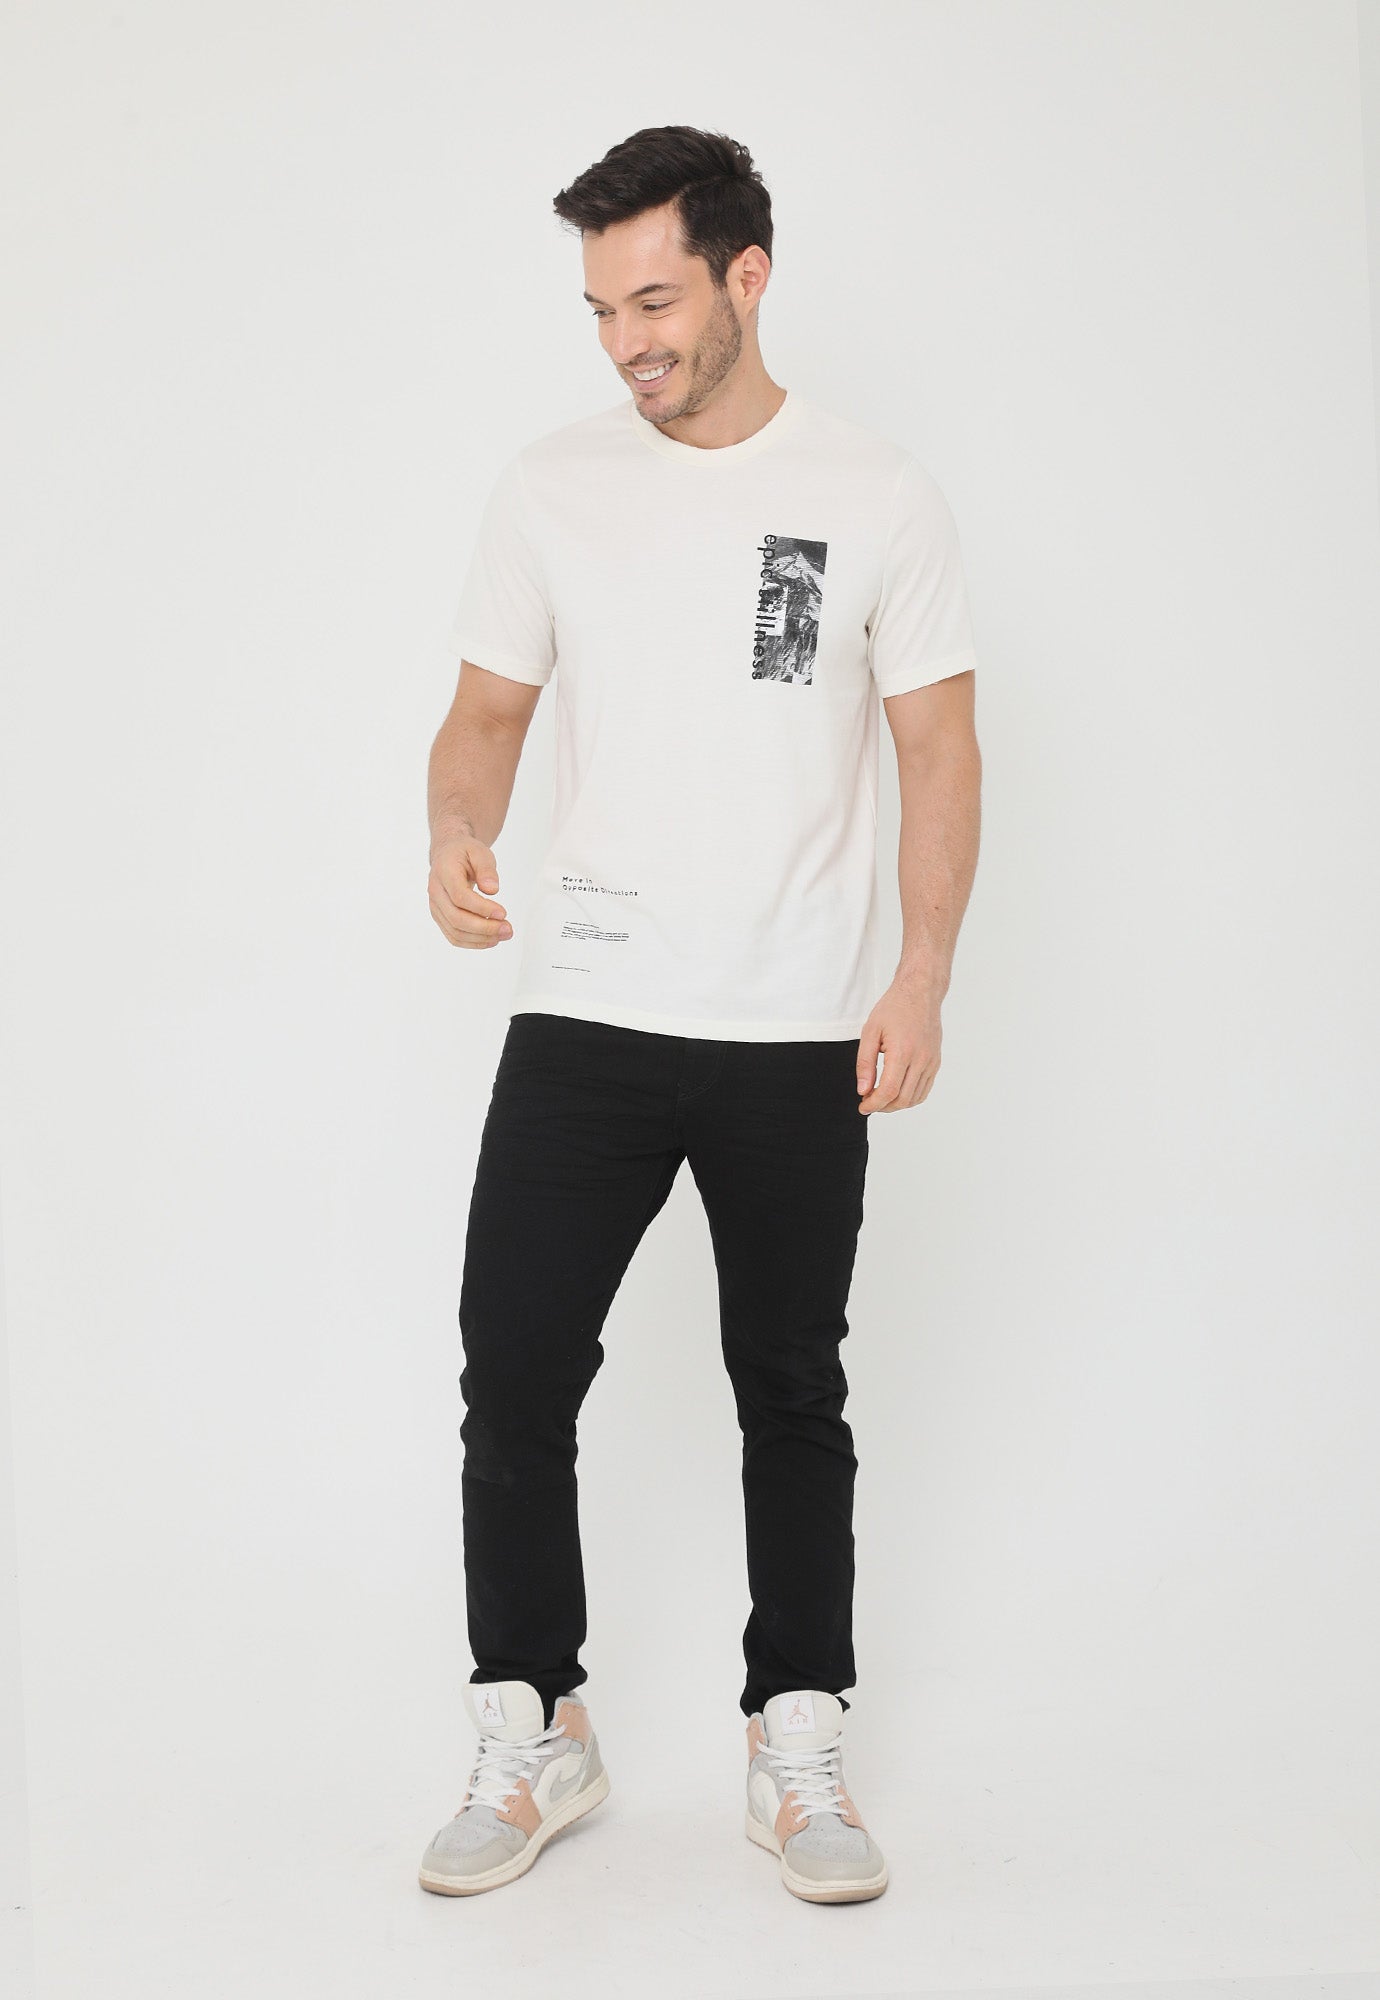 Camiseta relax ivory manga corta con estampado vertical en pecho para hombre